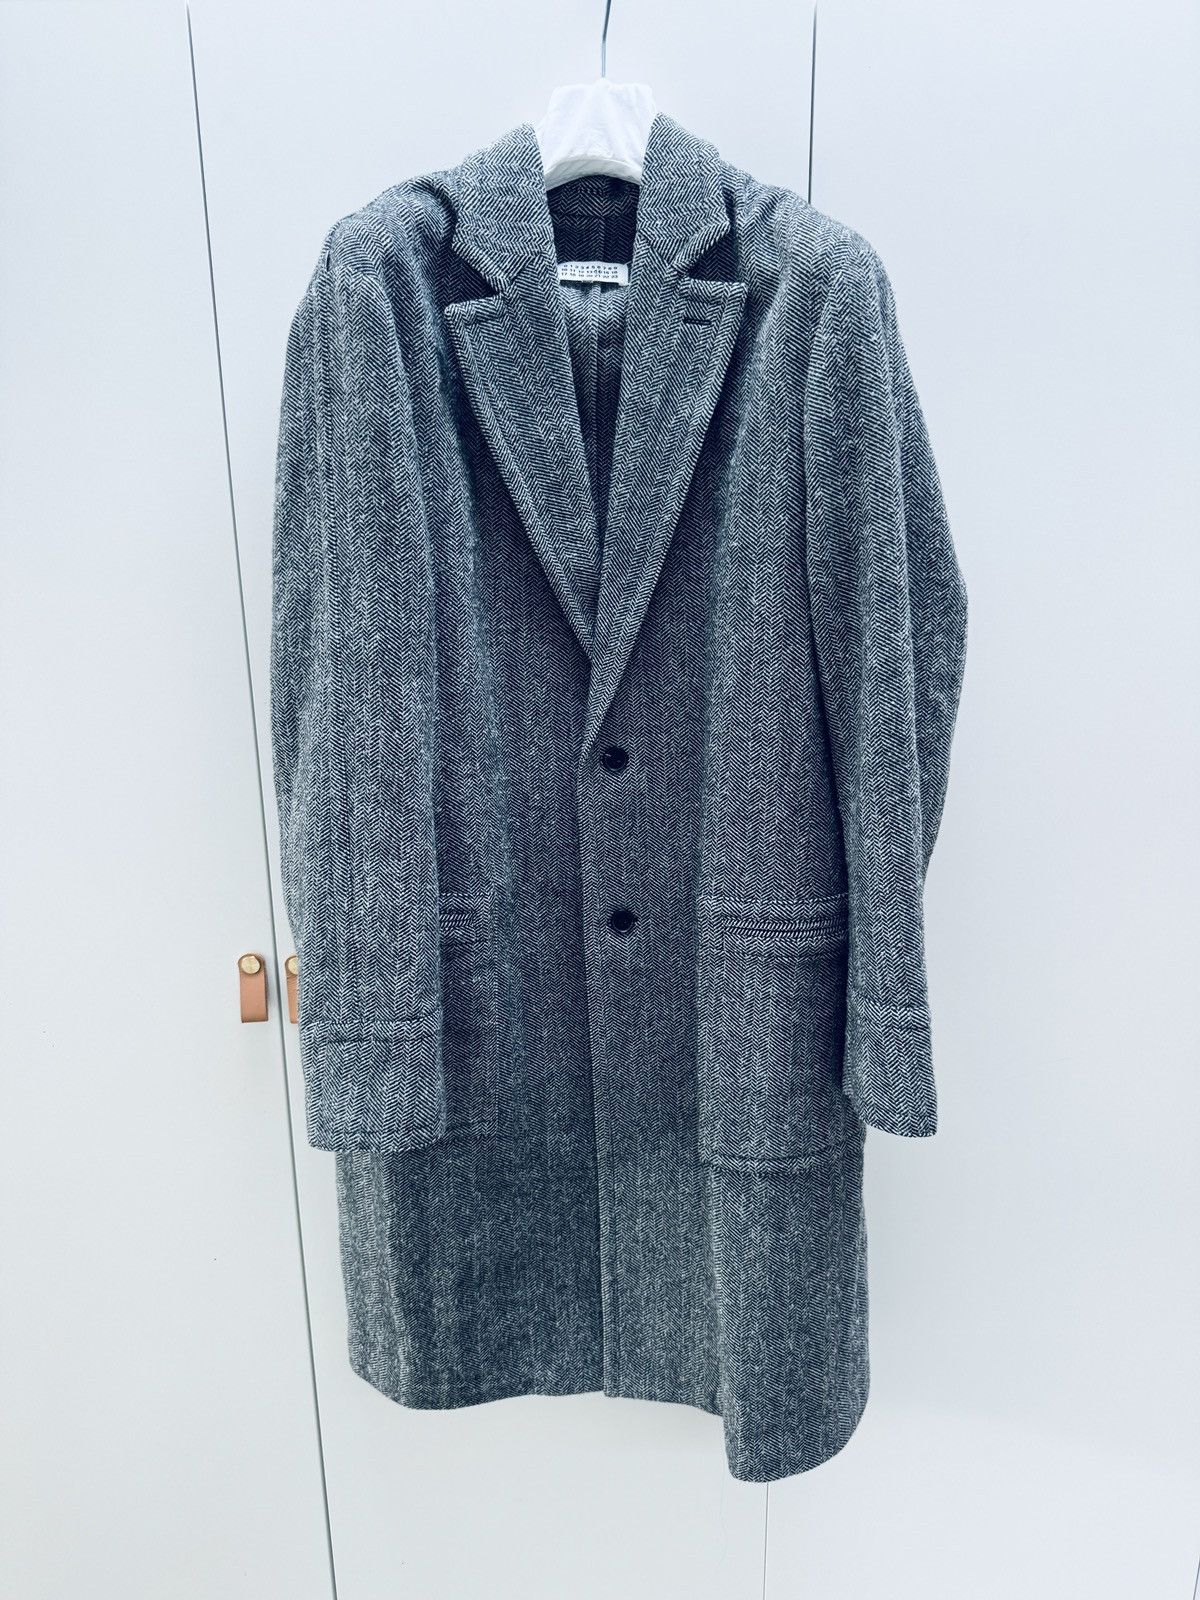 Maison Margiela New Wool Cashmere Overcoat | Grailed